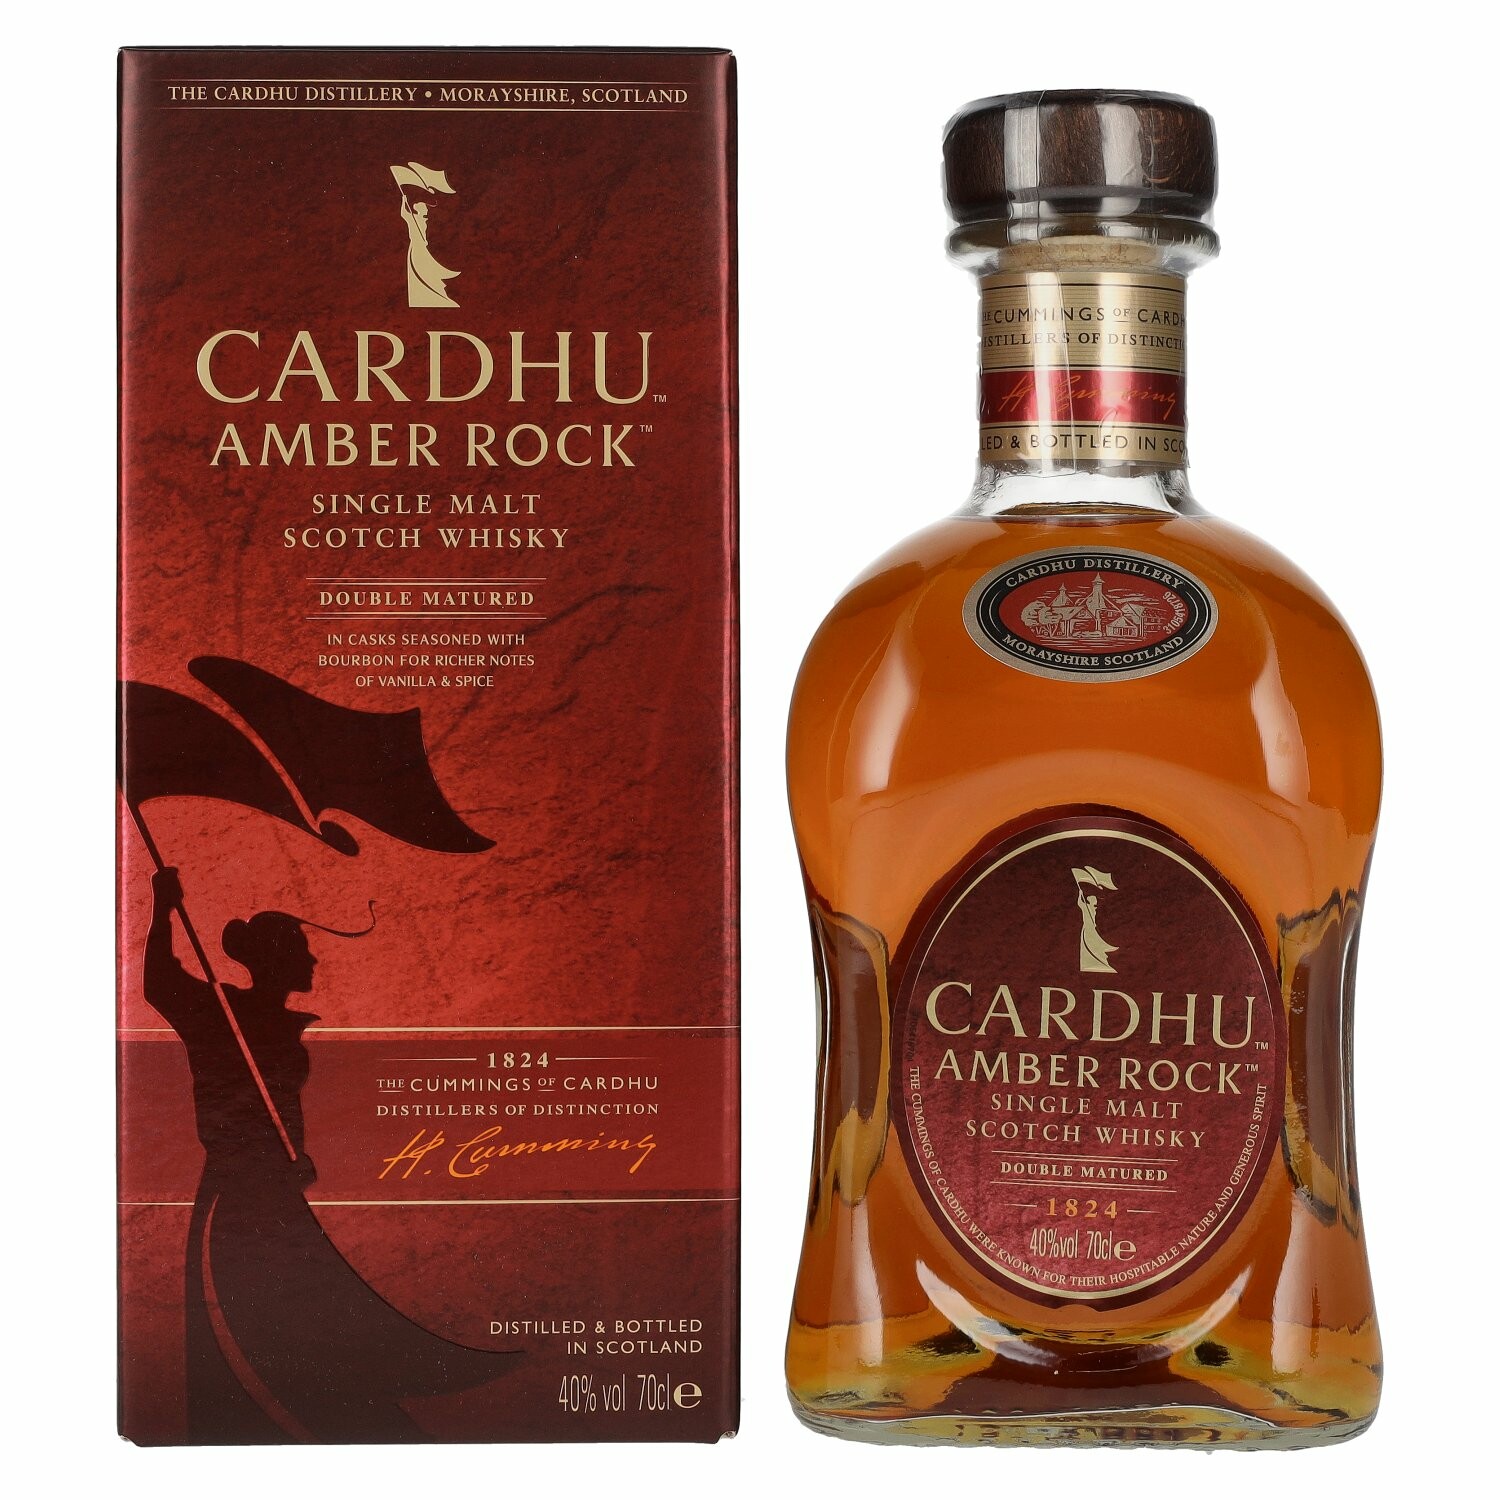 Cardhu AMBER ROCK Double Matured Single Malt Scotch Whisky 40% Vol. 0,7l in Giftbox